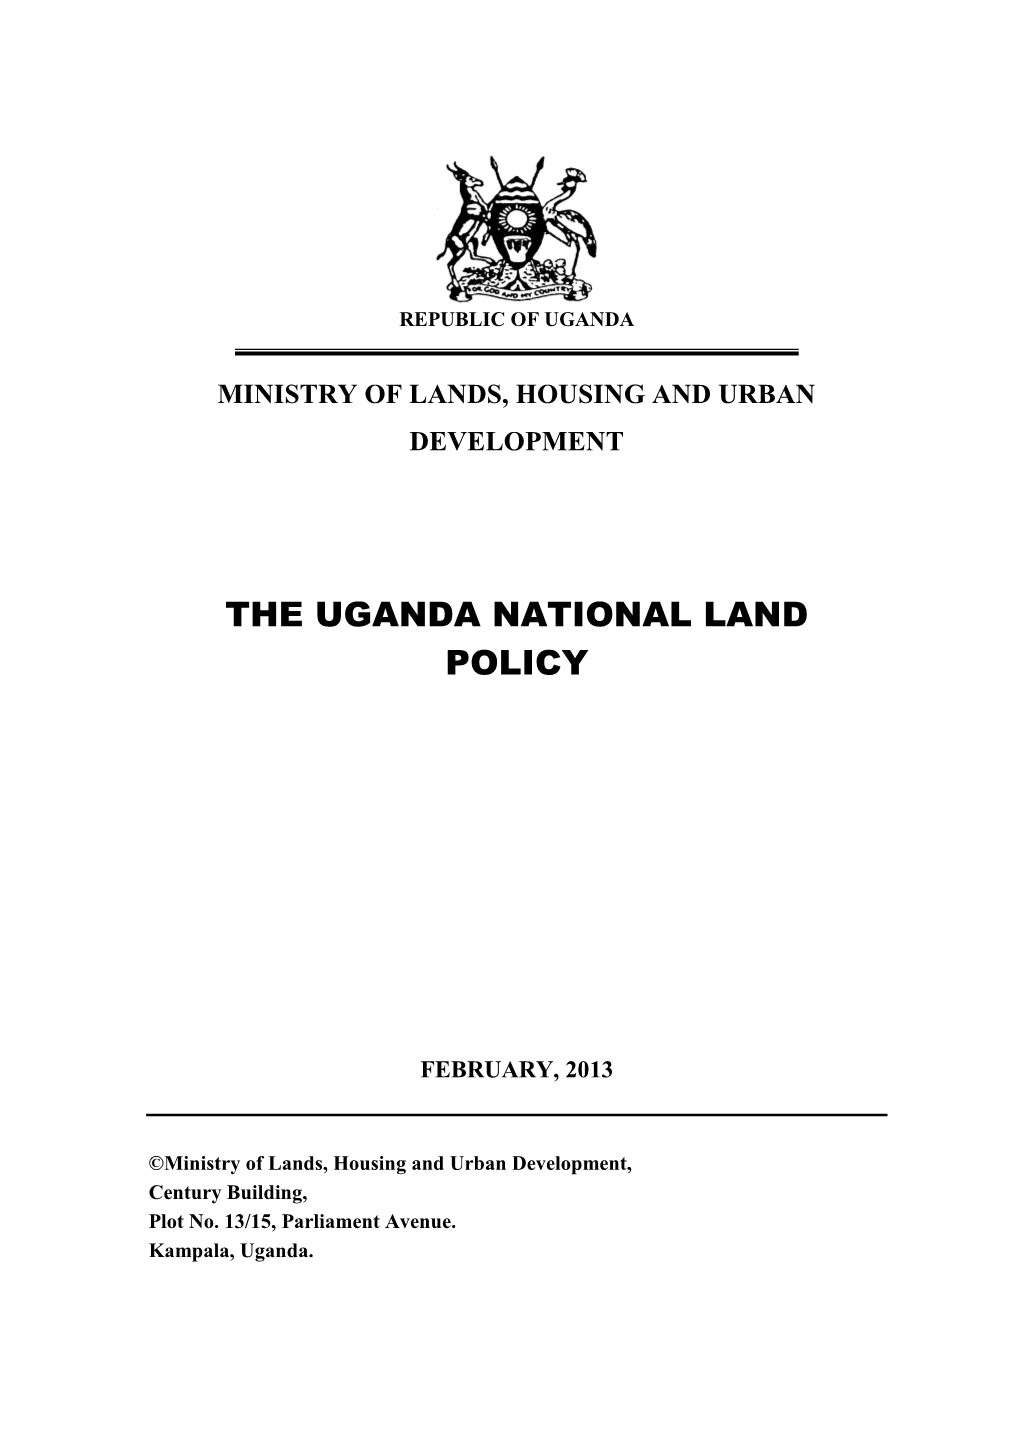 The Uganda National Land Policy